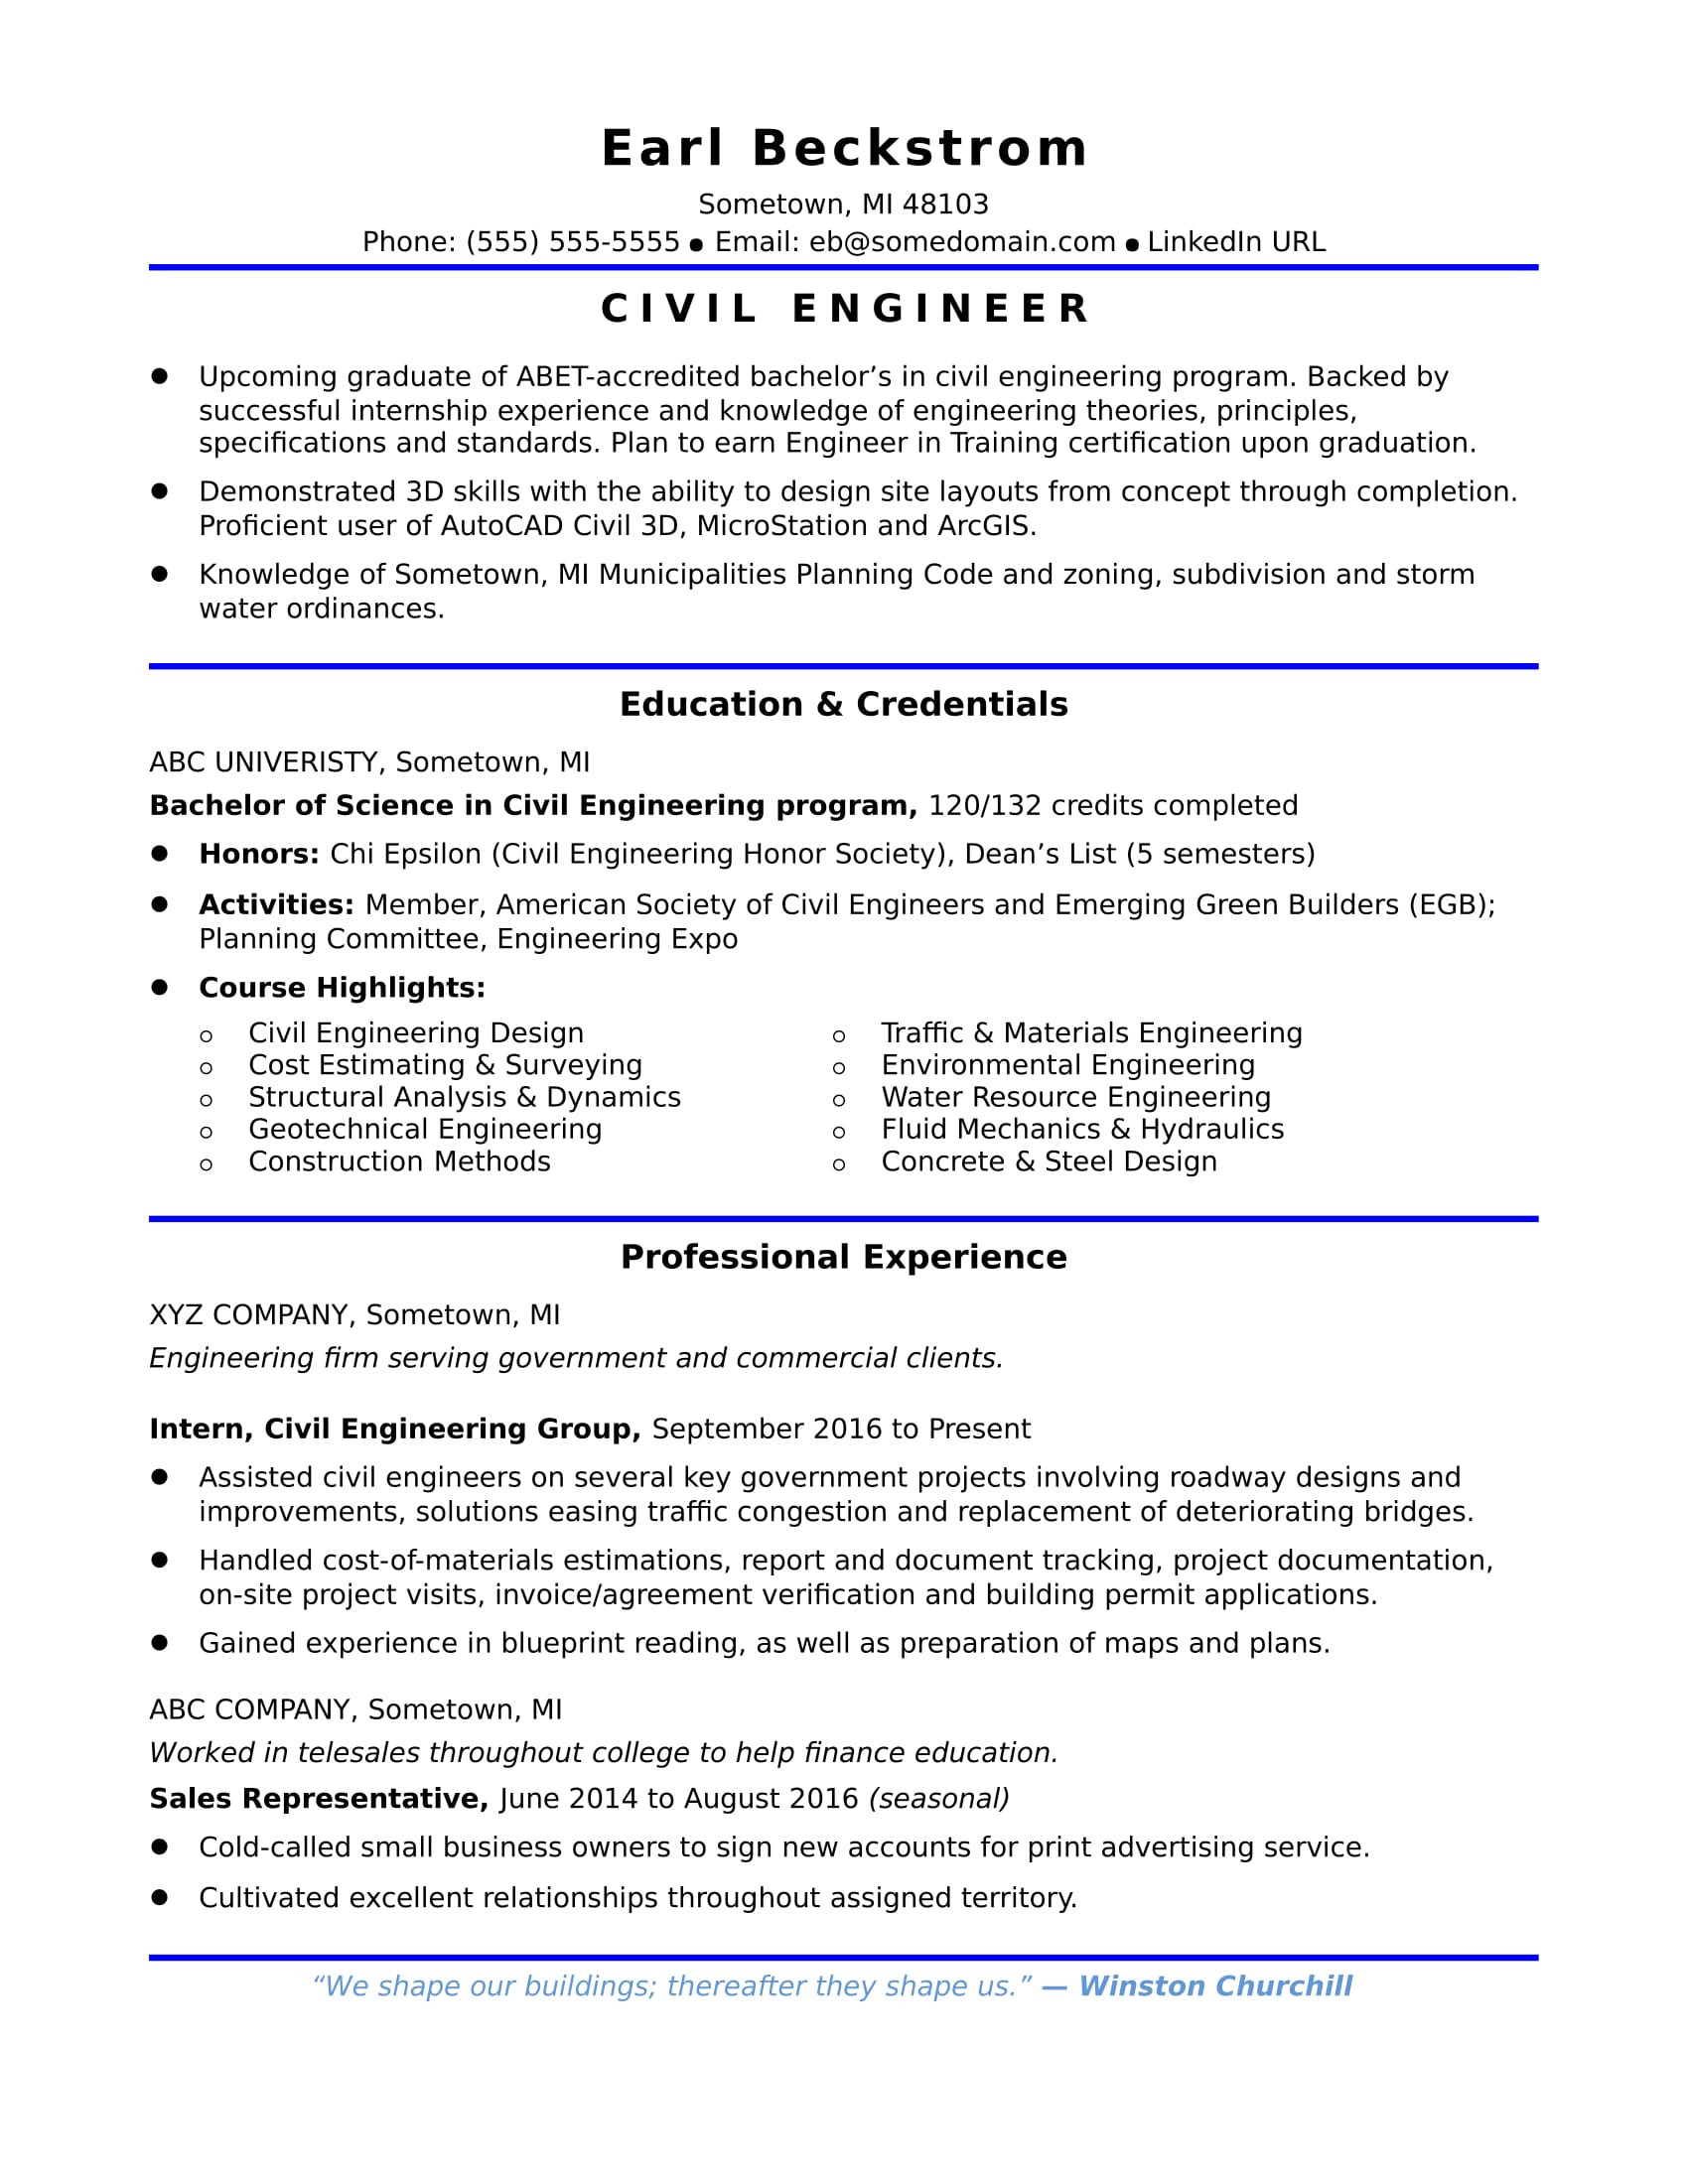 Sample Resume for Civil Engineer Experienced Sample Resume for An Entry-level Civil Engineer Monster.com